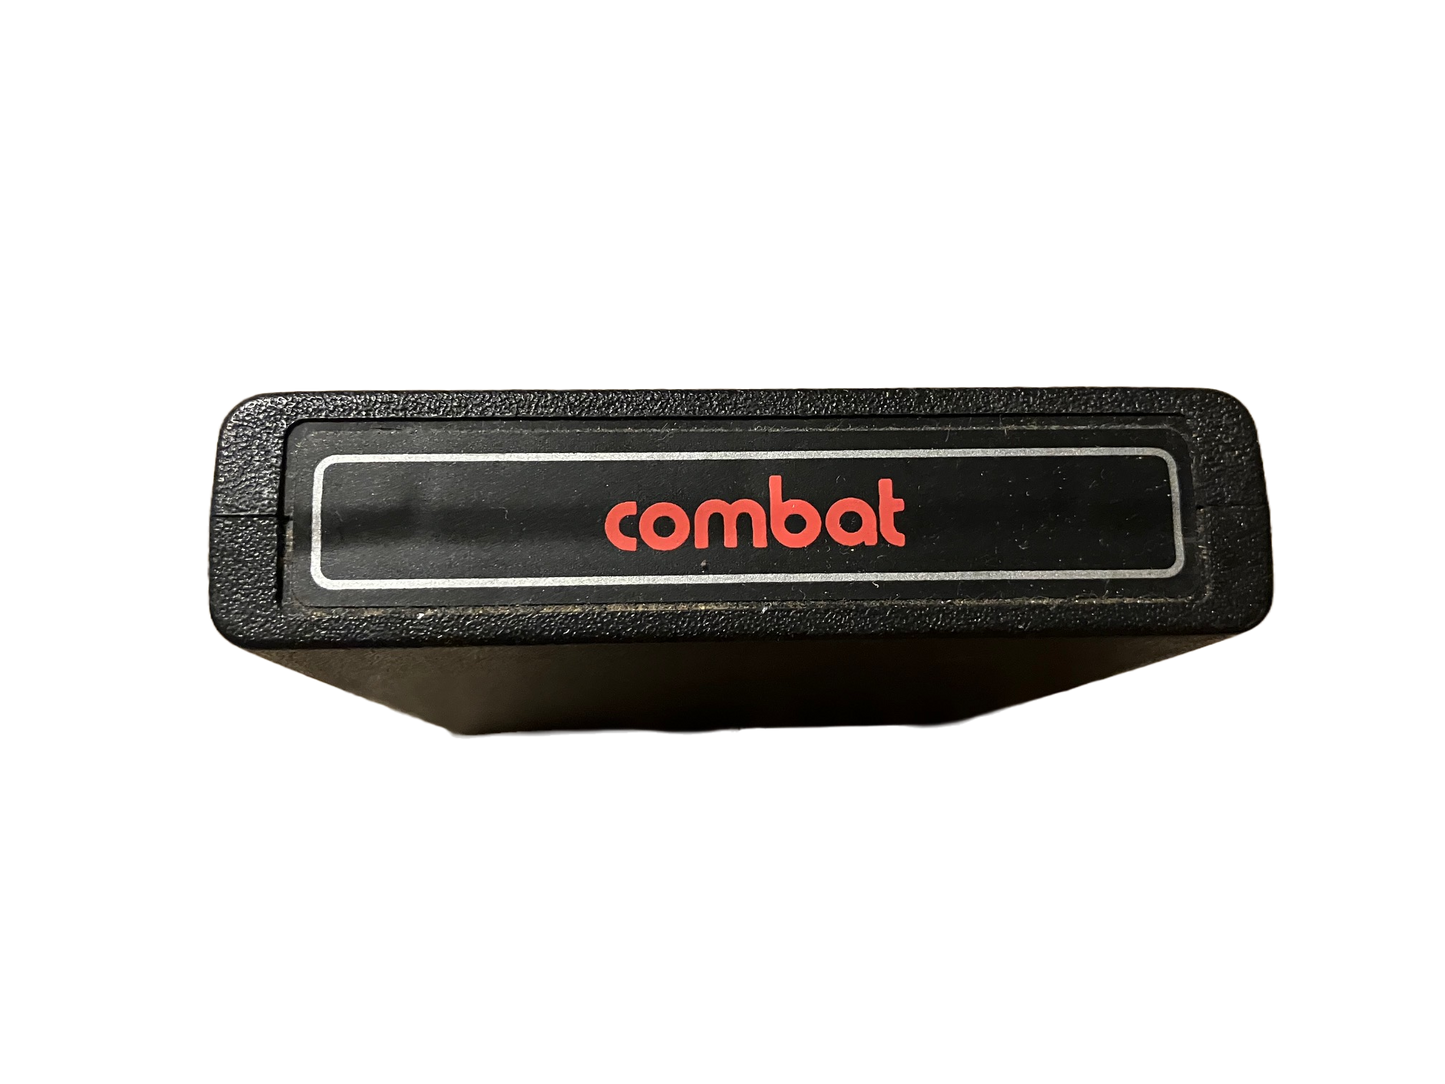 Combat Text Label Atari 2600 Video Game